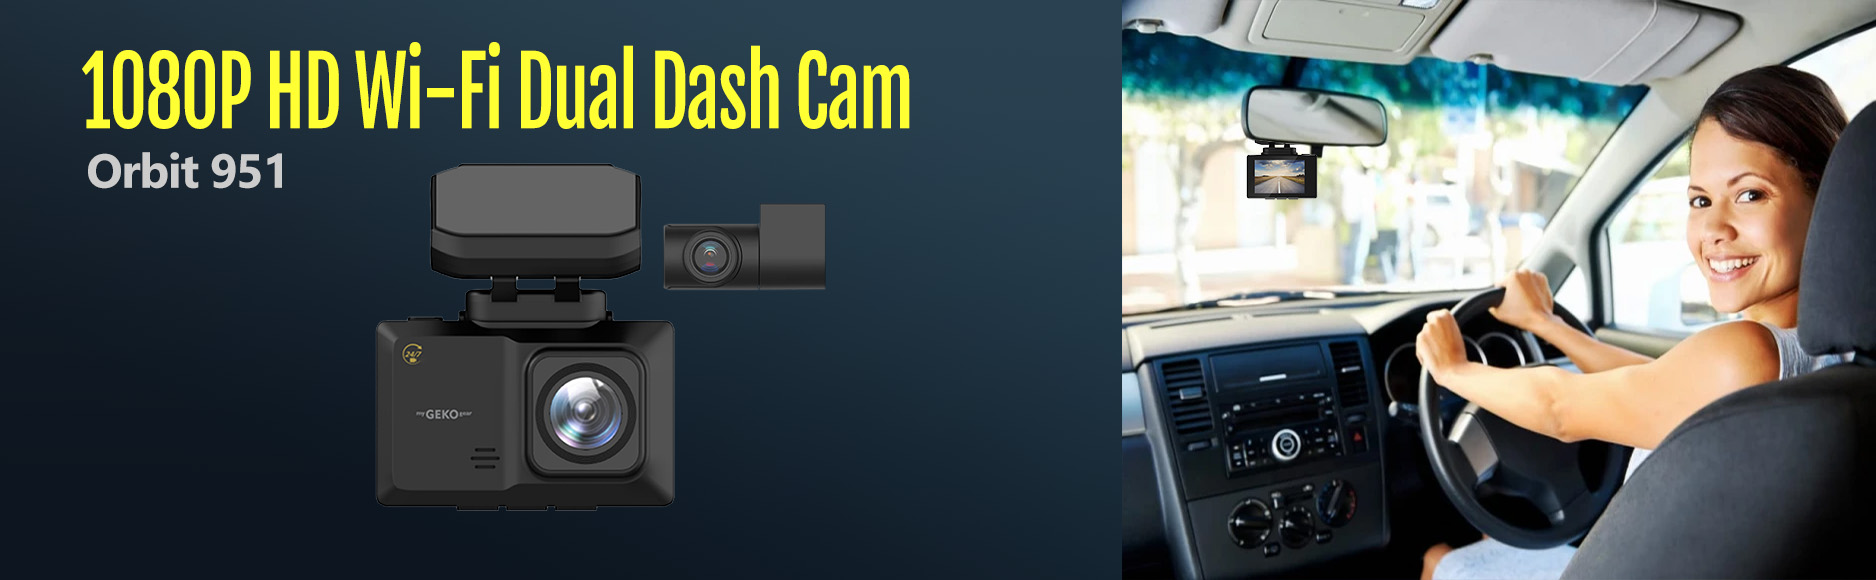 Orbit 951- 1080P HD WiFi Dual Dash Cam